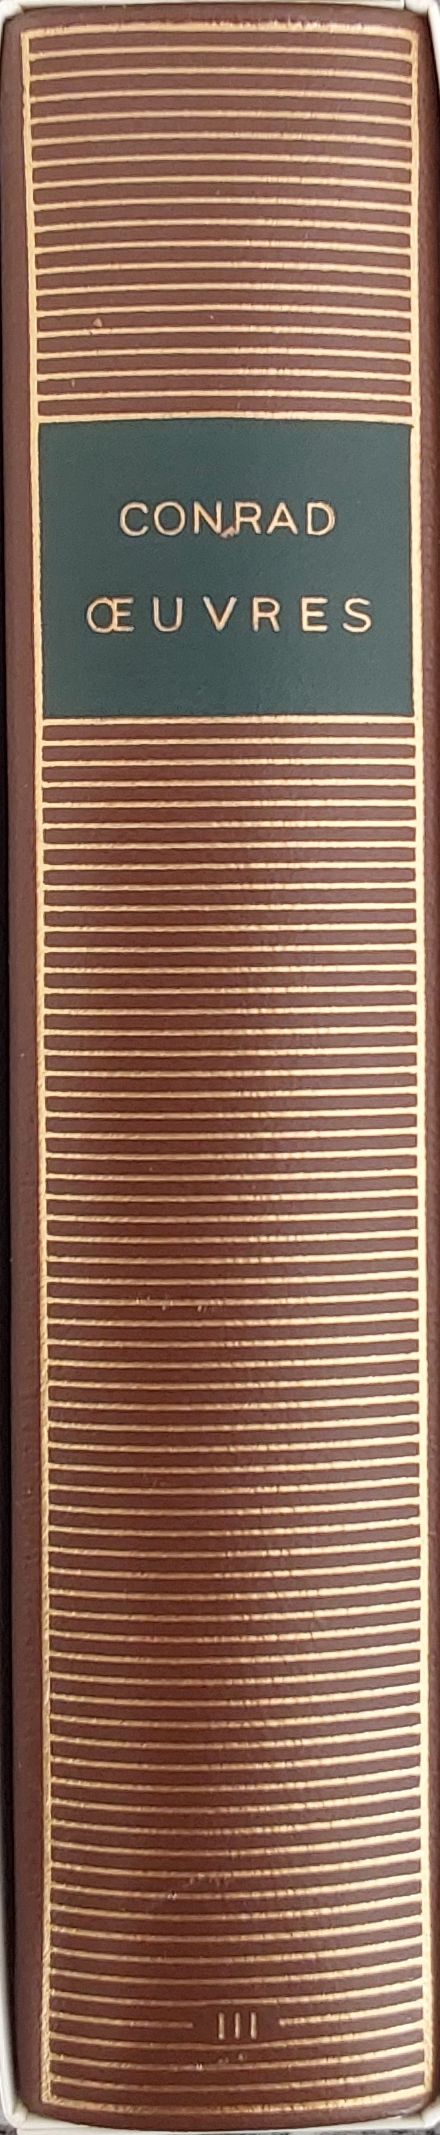 Volume 343 de Joseph Conrad dans la Bibliothèque de la Pléiade